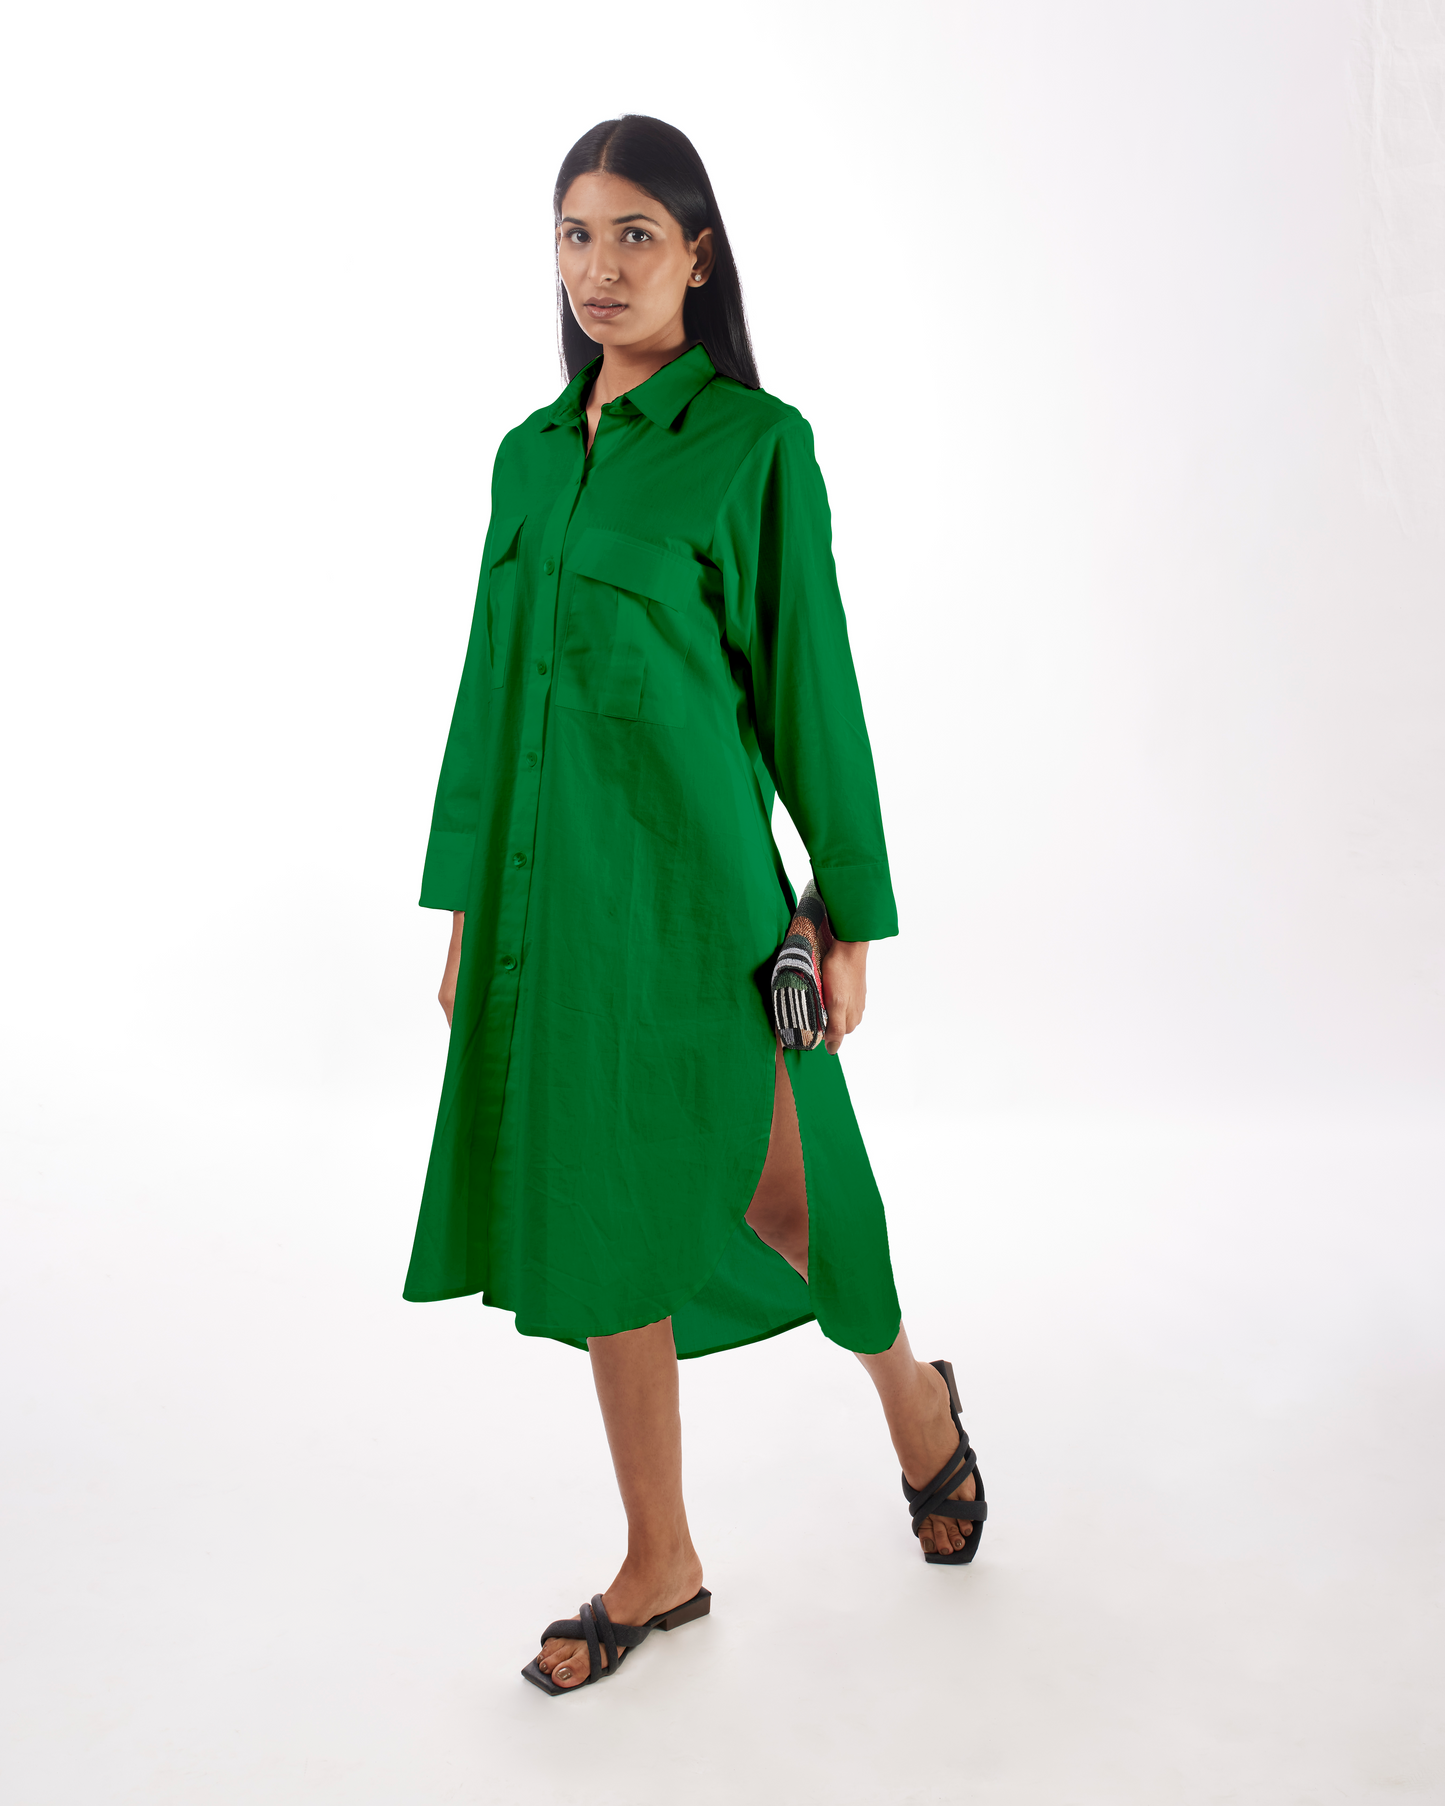 Green Shirt Dress High-Low at Kamakhyaa by Kamakhyaa. This item is Casual Wear, Green, KKYSS, Natural, Relaxed Fit, Shirt Dresses, Solids, Summer Sutra, Womenswear